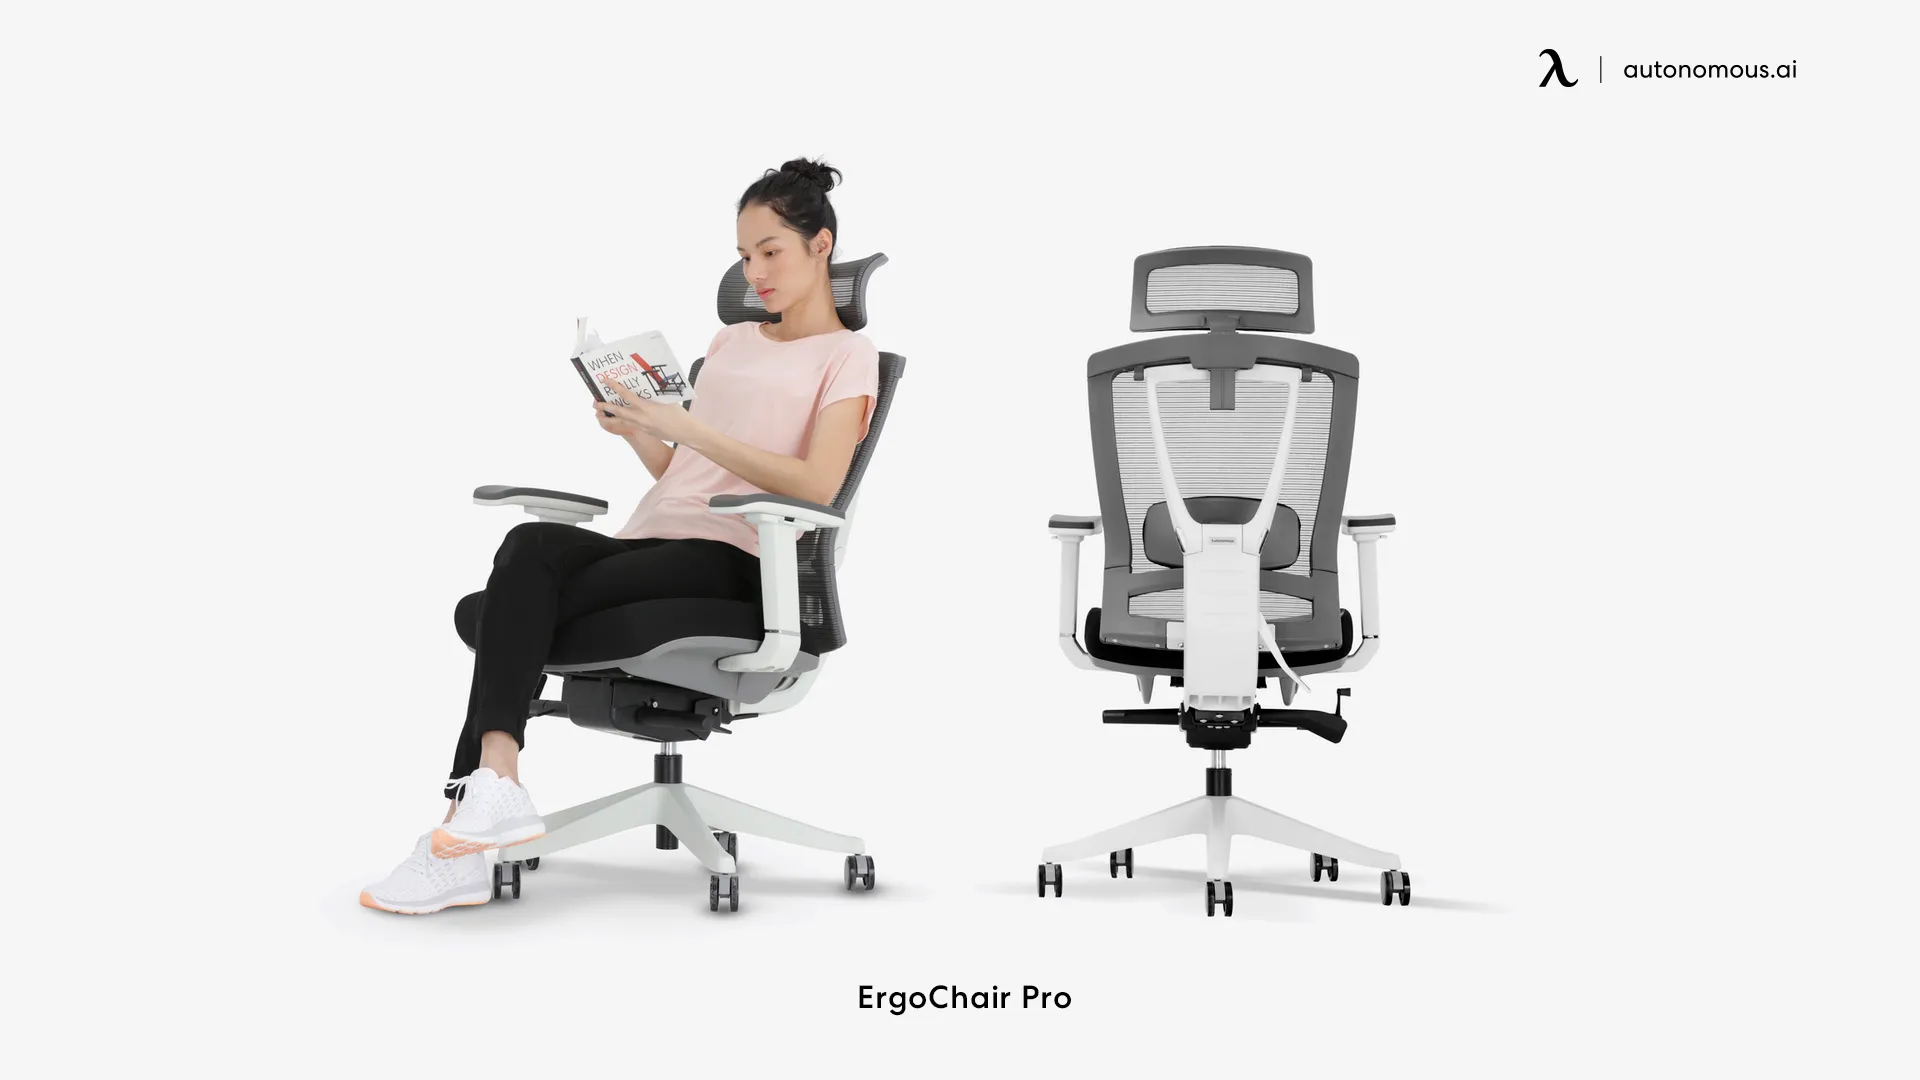 ErgoChair Pro industrial work chair